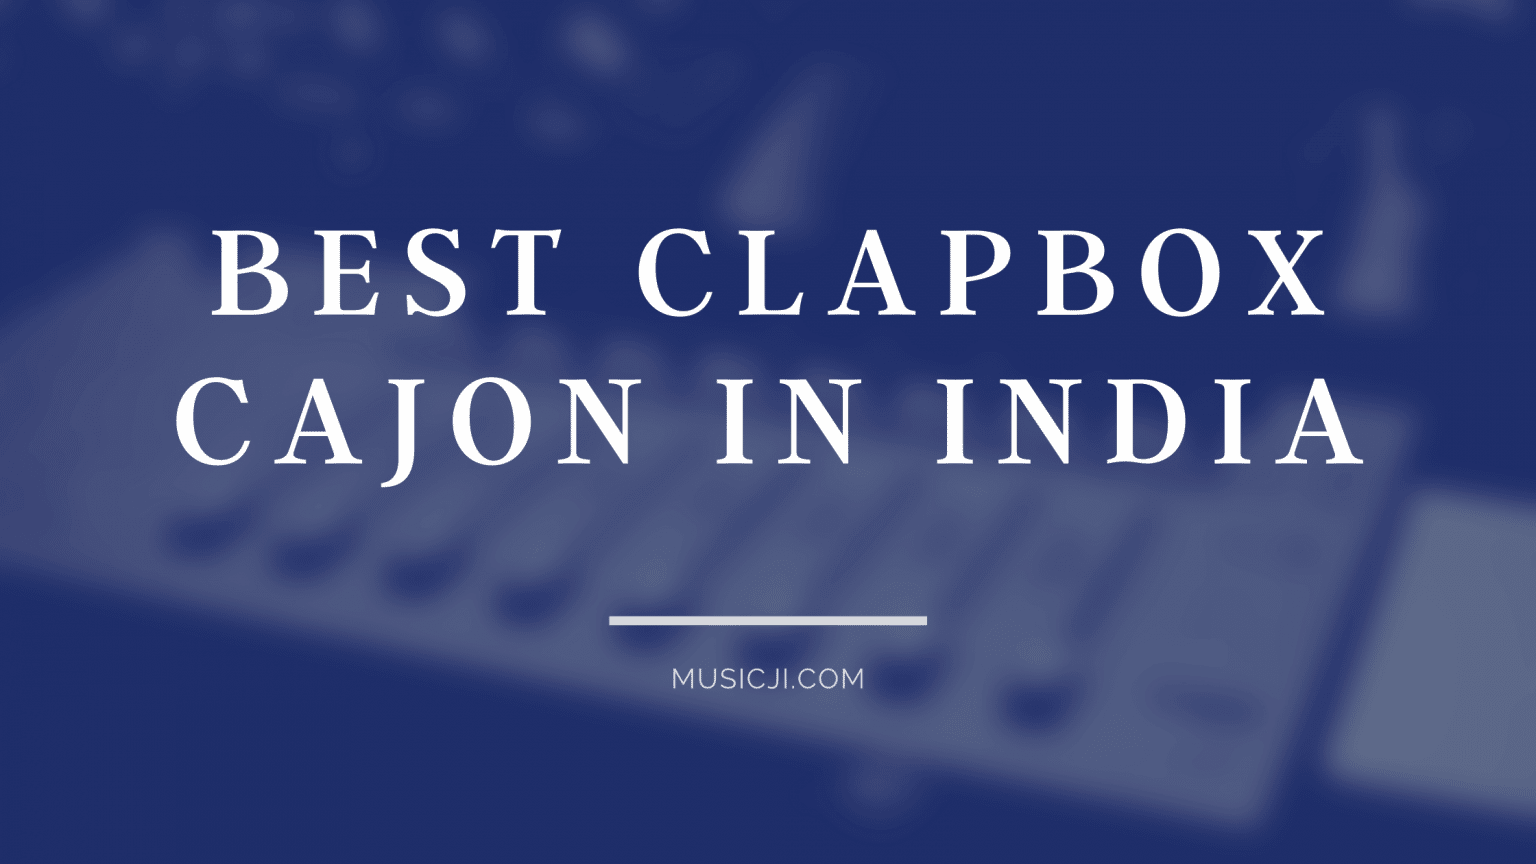 Best Clapbox Cajon